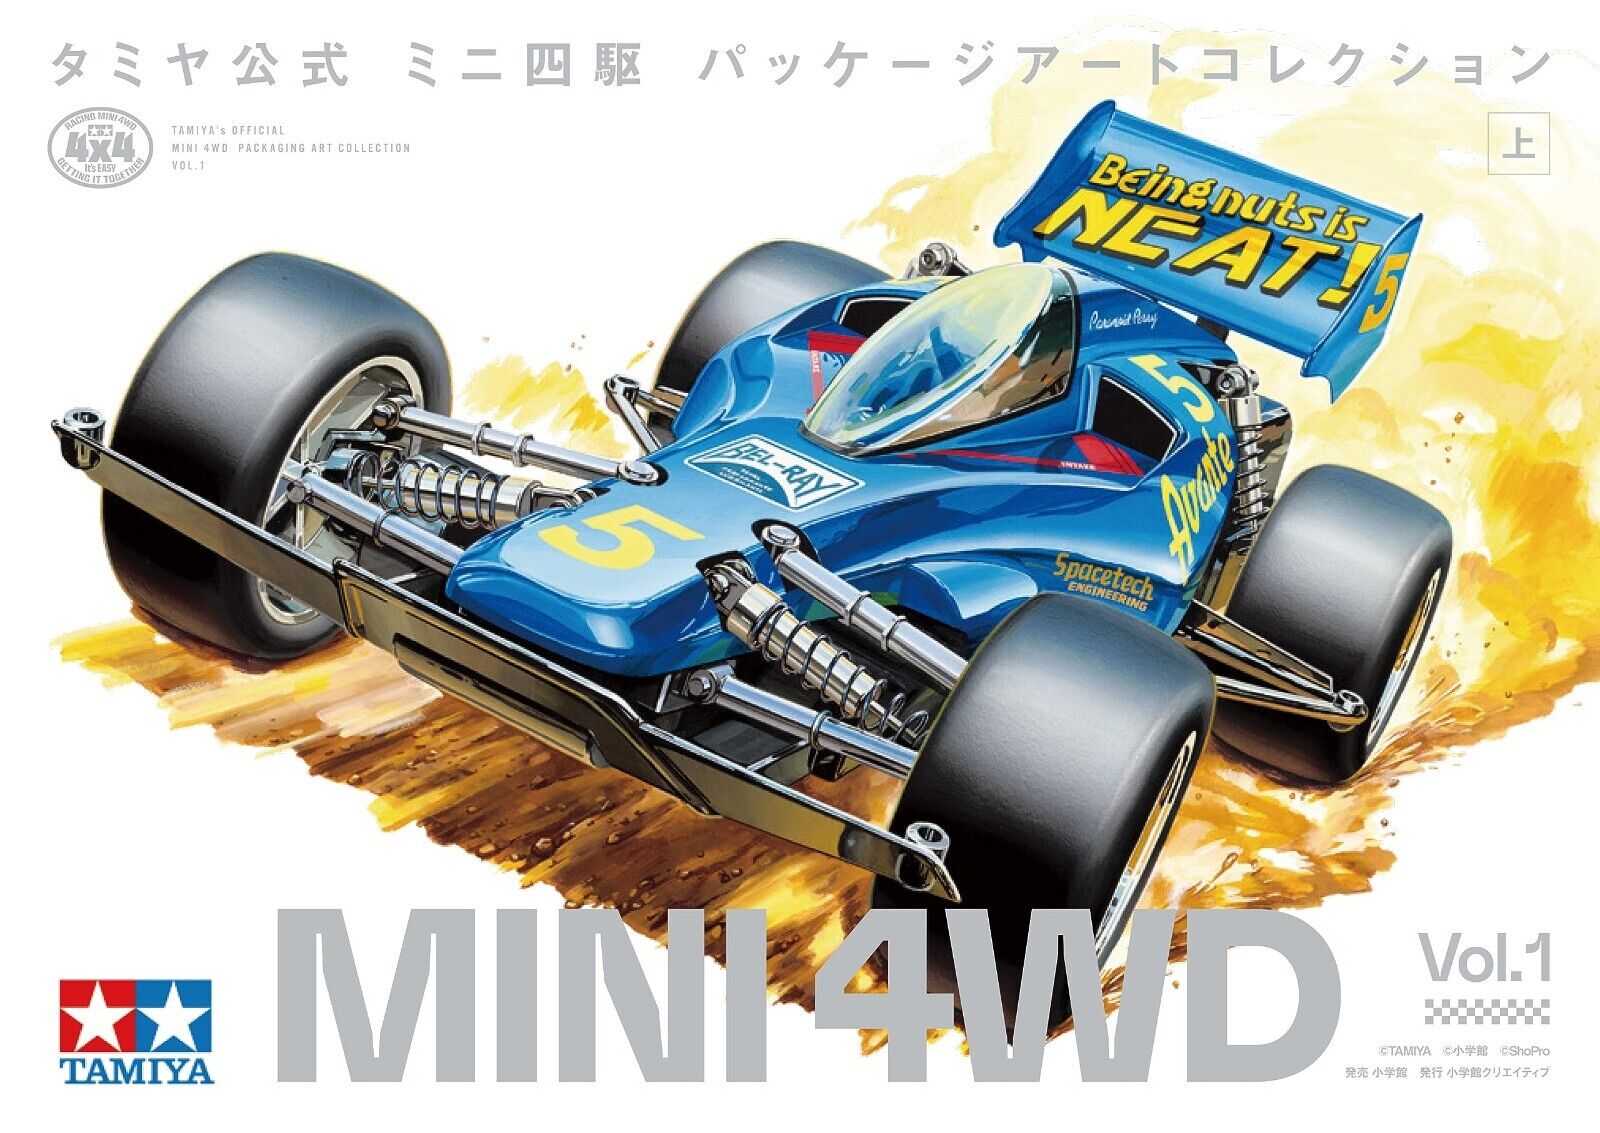 TAMIYA Official Mini 4WD Packaging Art Collection Vol.1 | JAPAN Book Mini Yonku